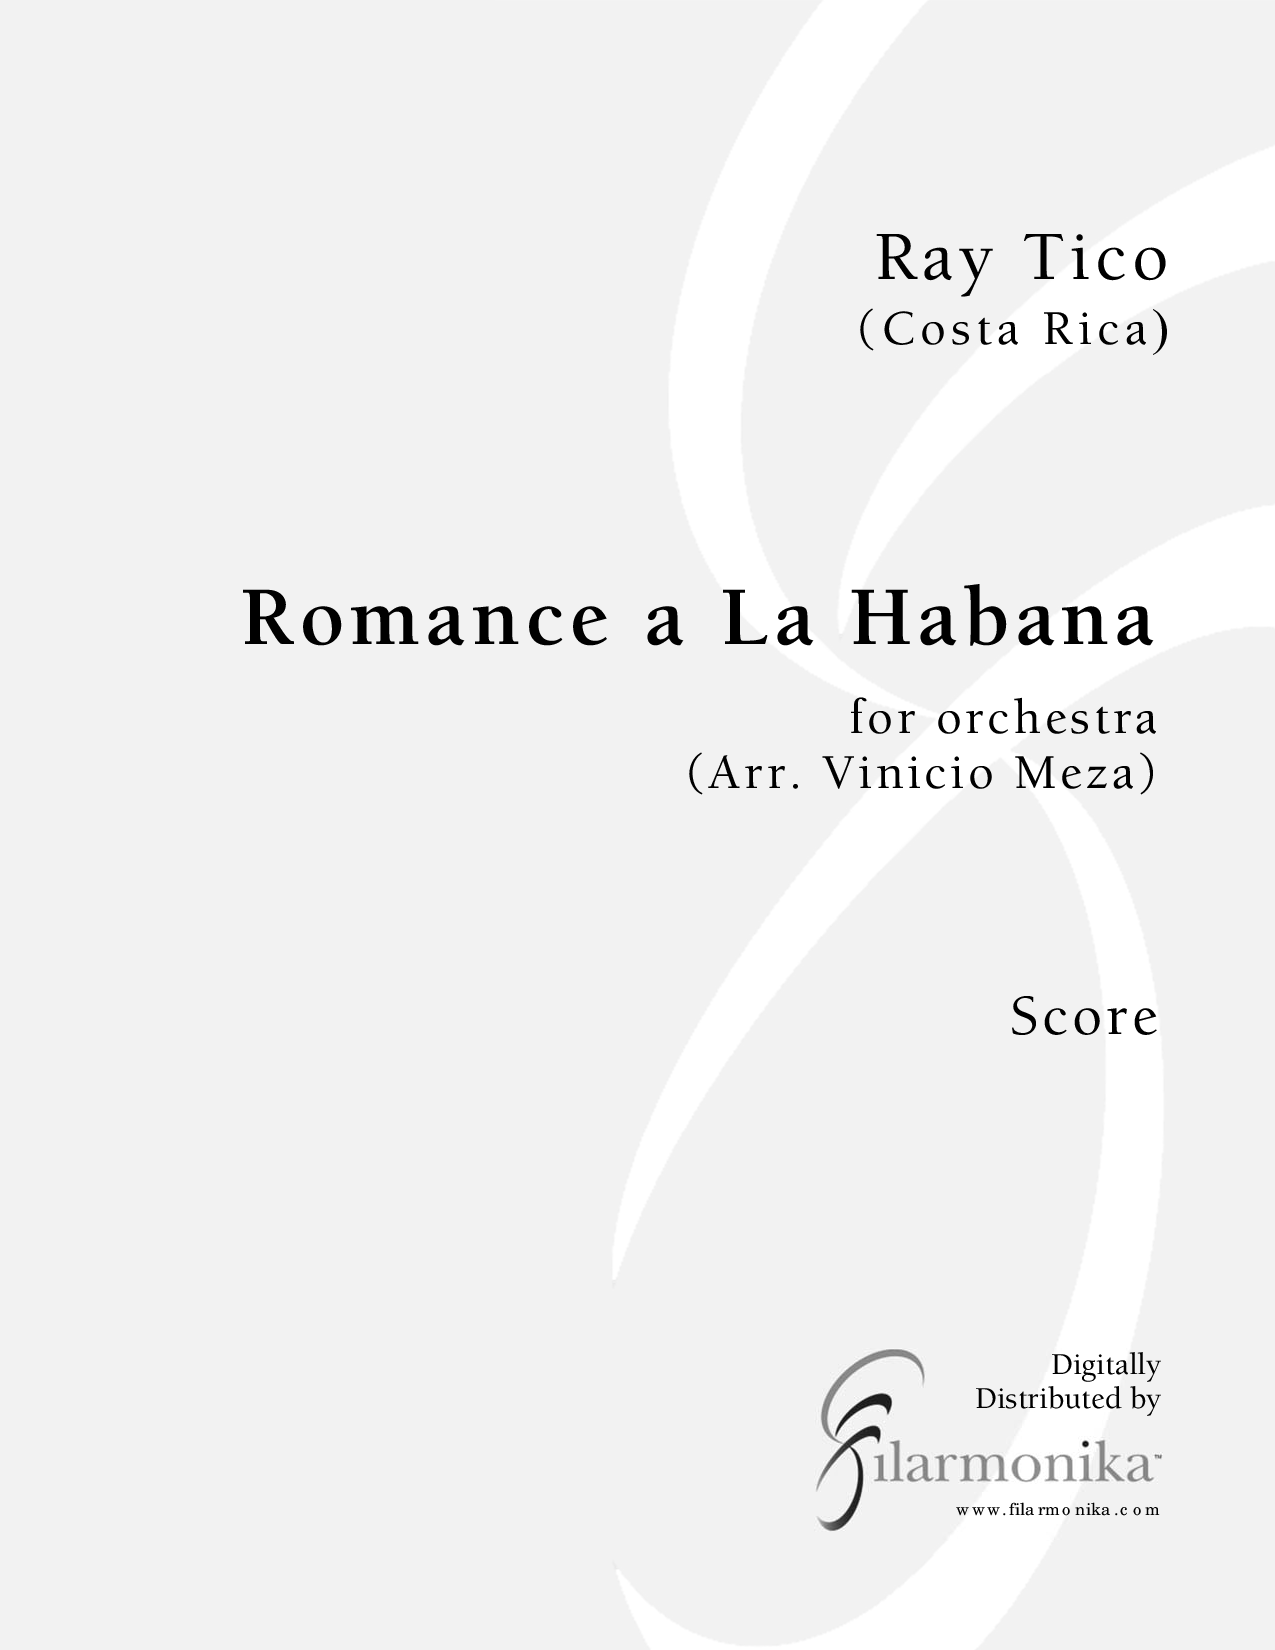 Romance a La Habana, for orchestra